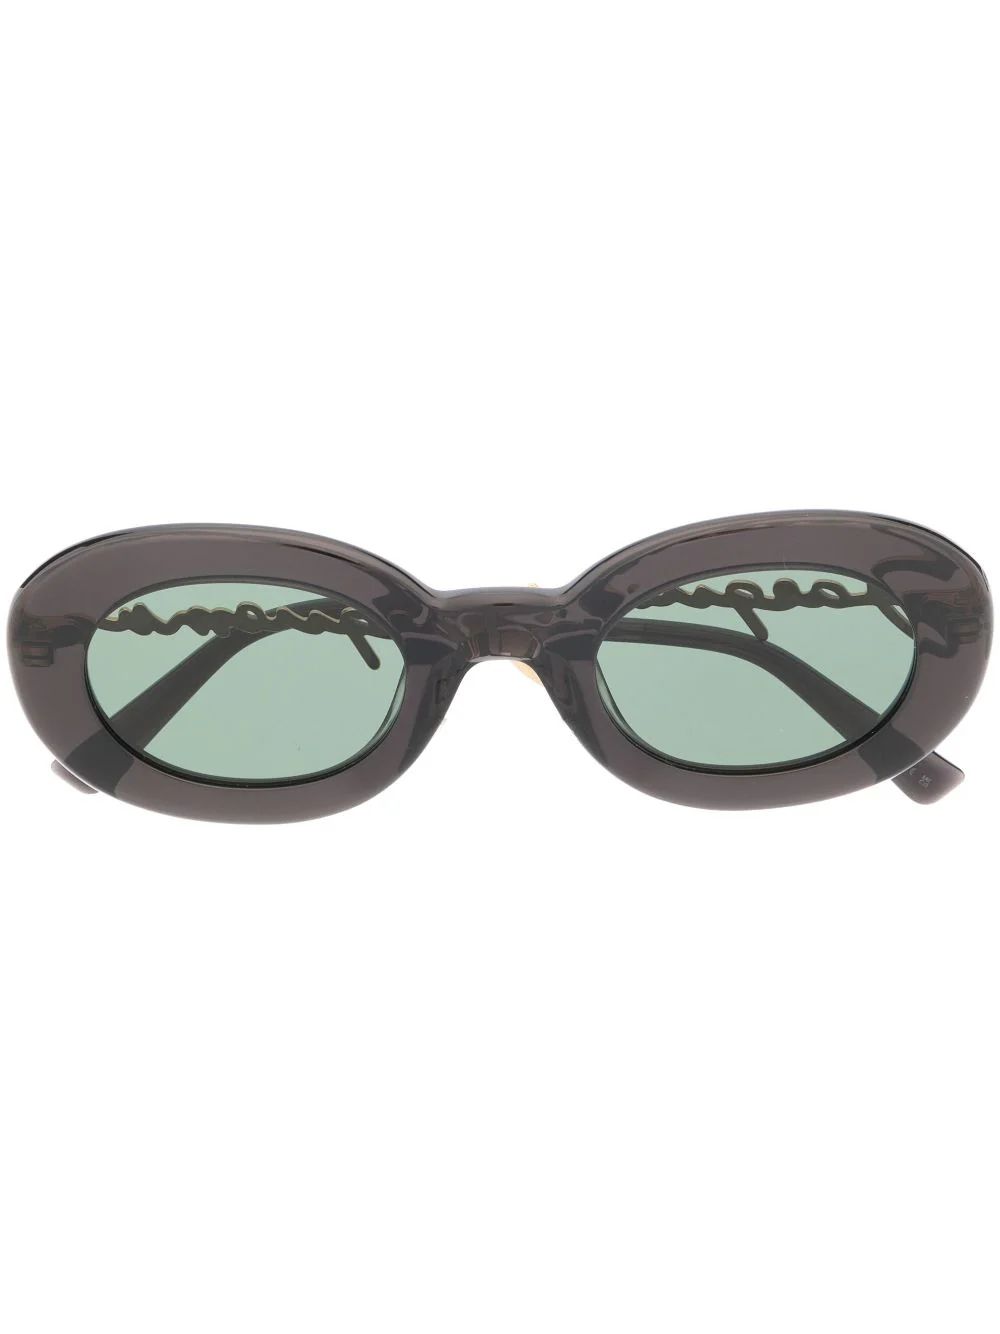 Les lunettes Pralu round-frame sunglasses | Farfetch Global